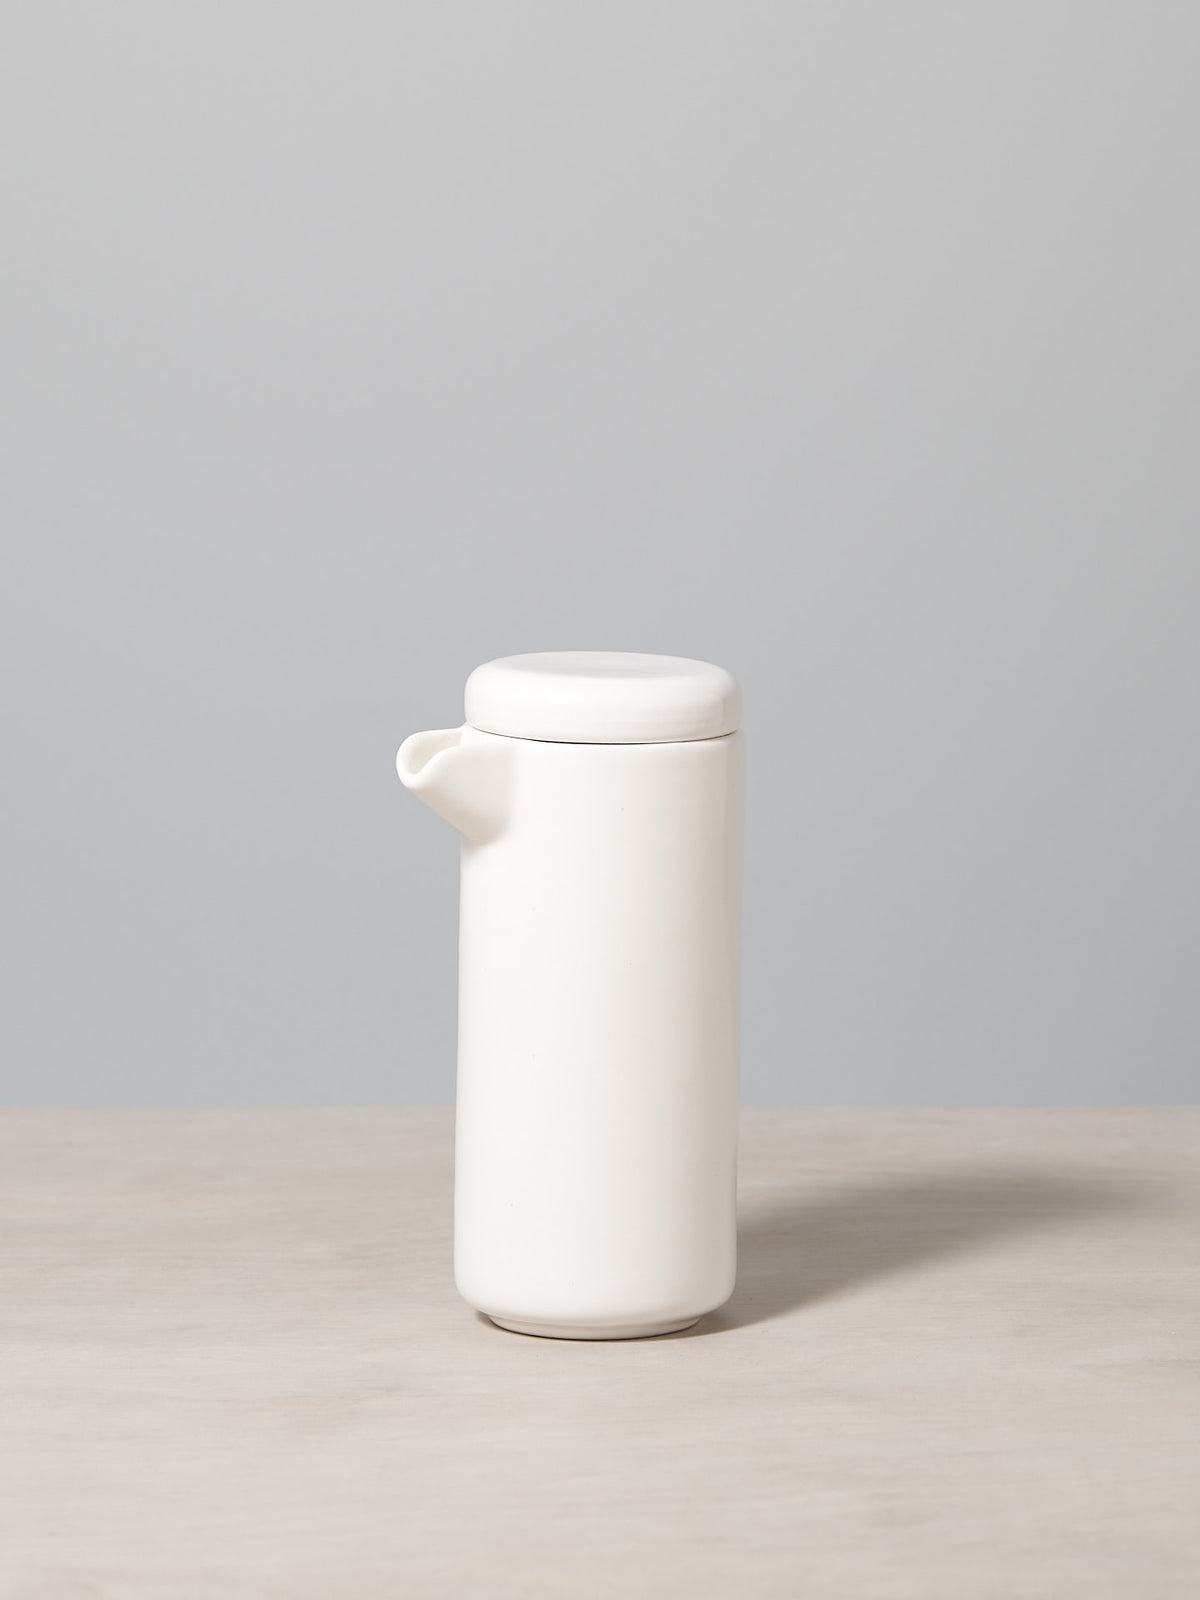 A Small Twin Wall Coffee/Tea Pot – Satin White by Gidon Bing sitting on a table.